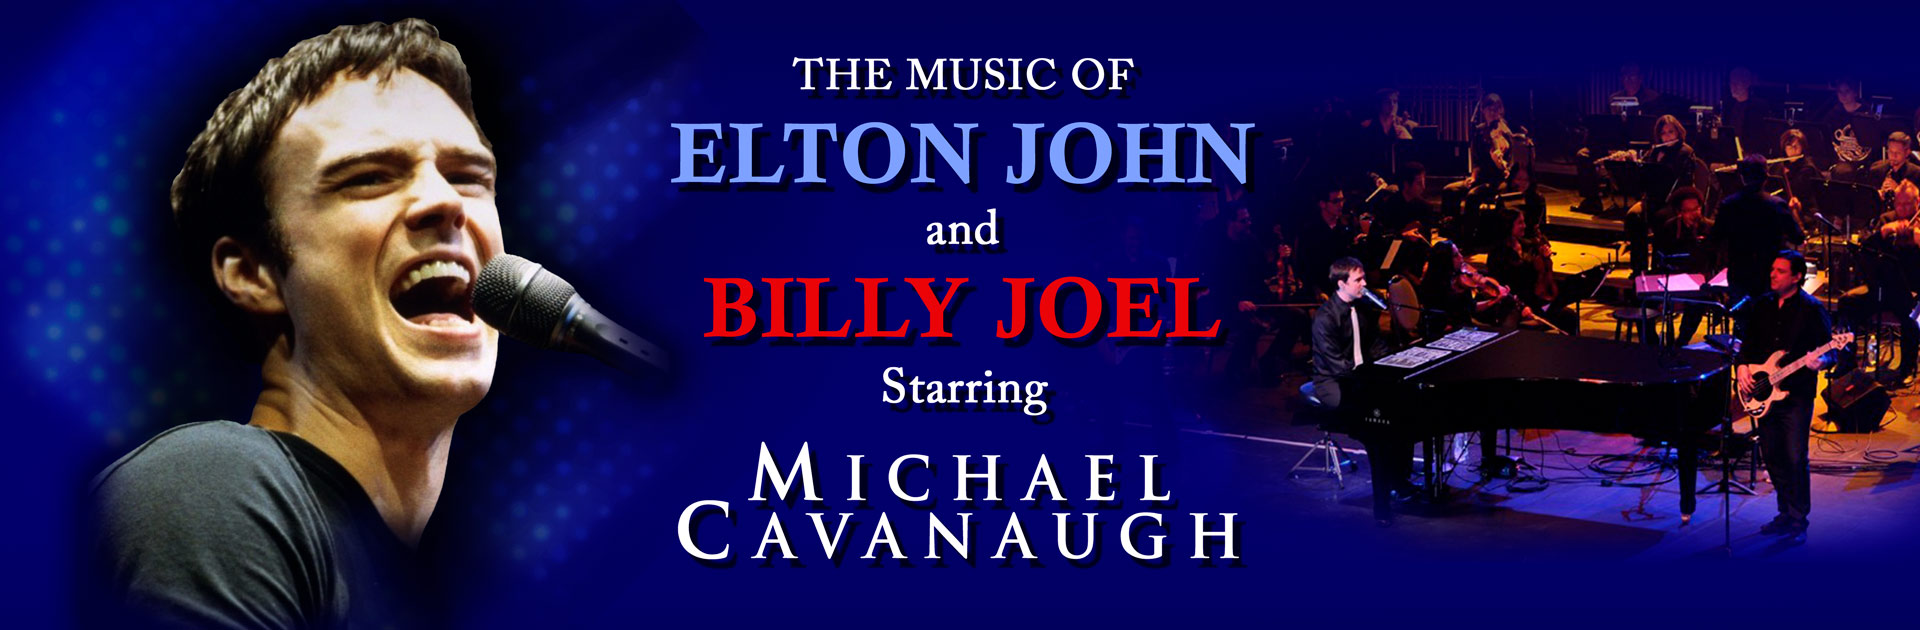 The Music of Elton John and Billy Joel starring Michael Cavanaugh